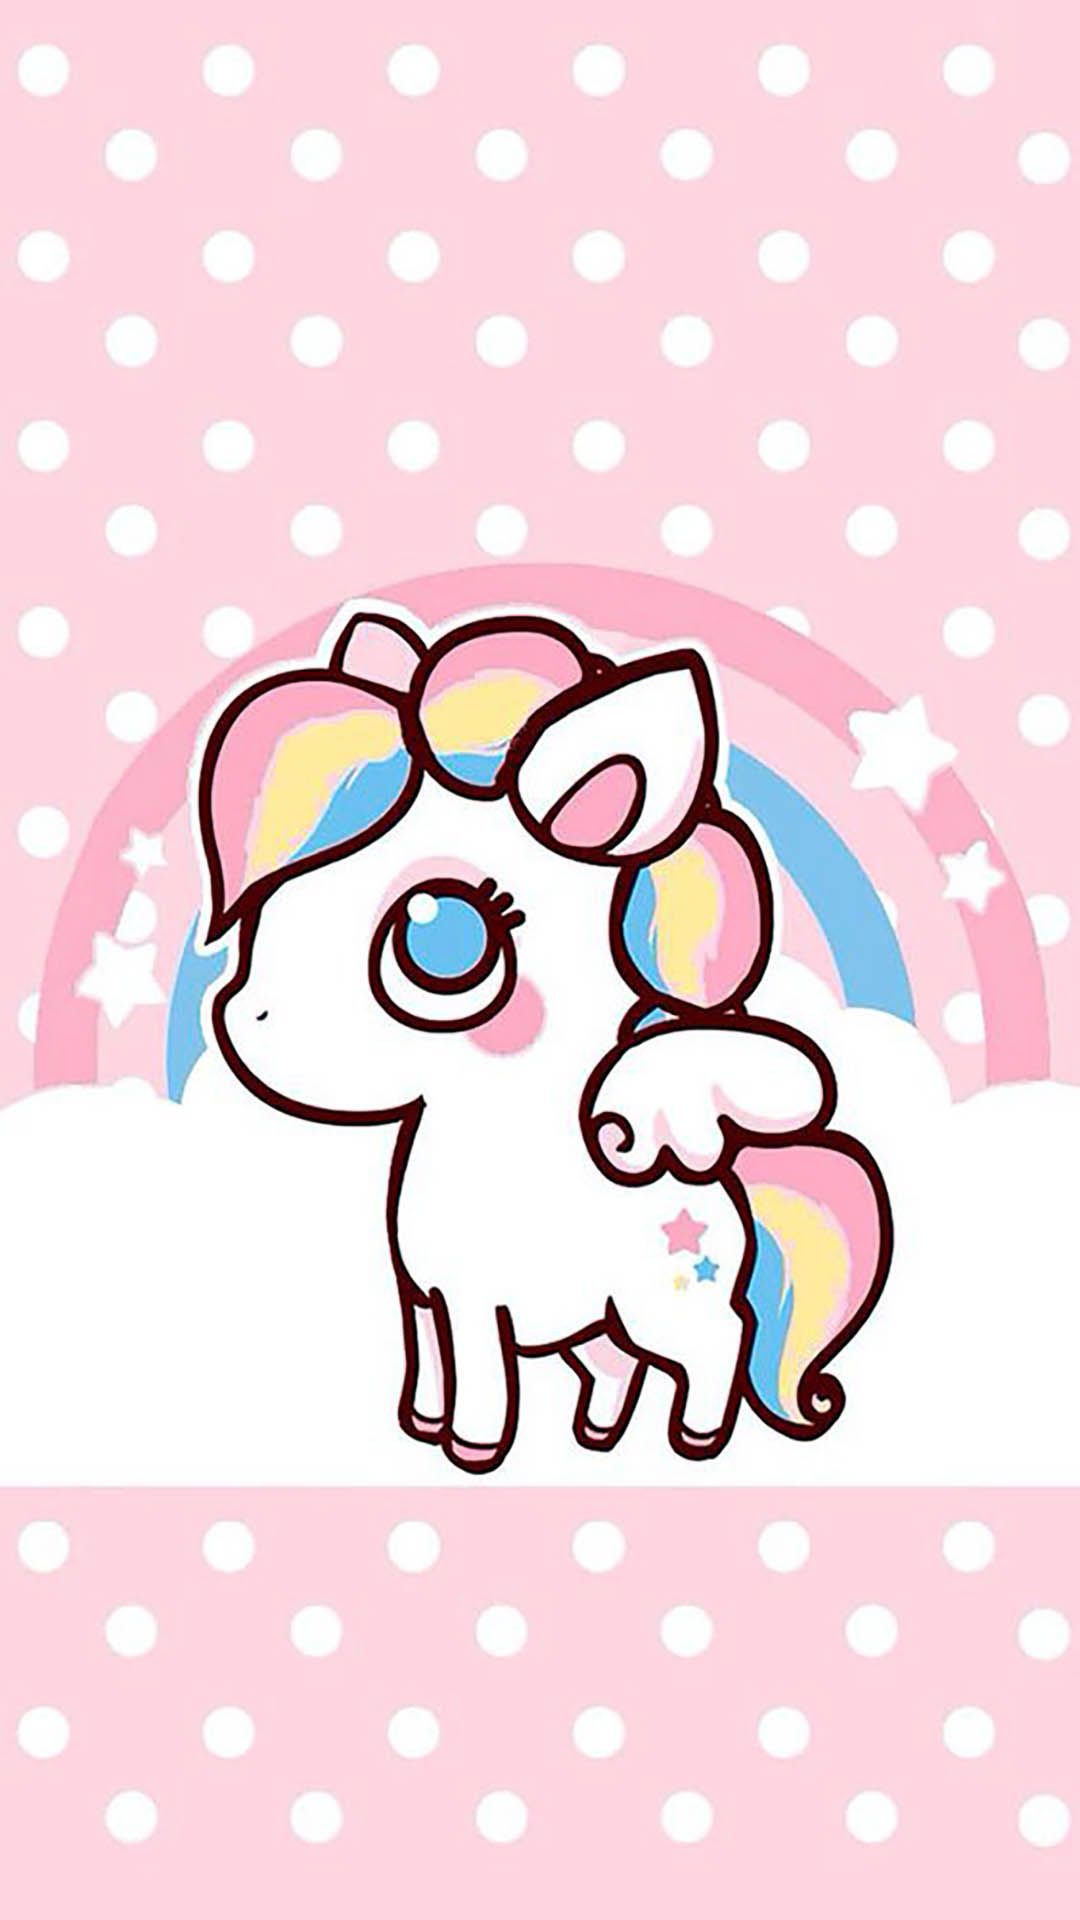 A cute pink and white unicorn on polka dot background - Unicorn